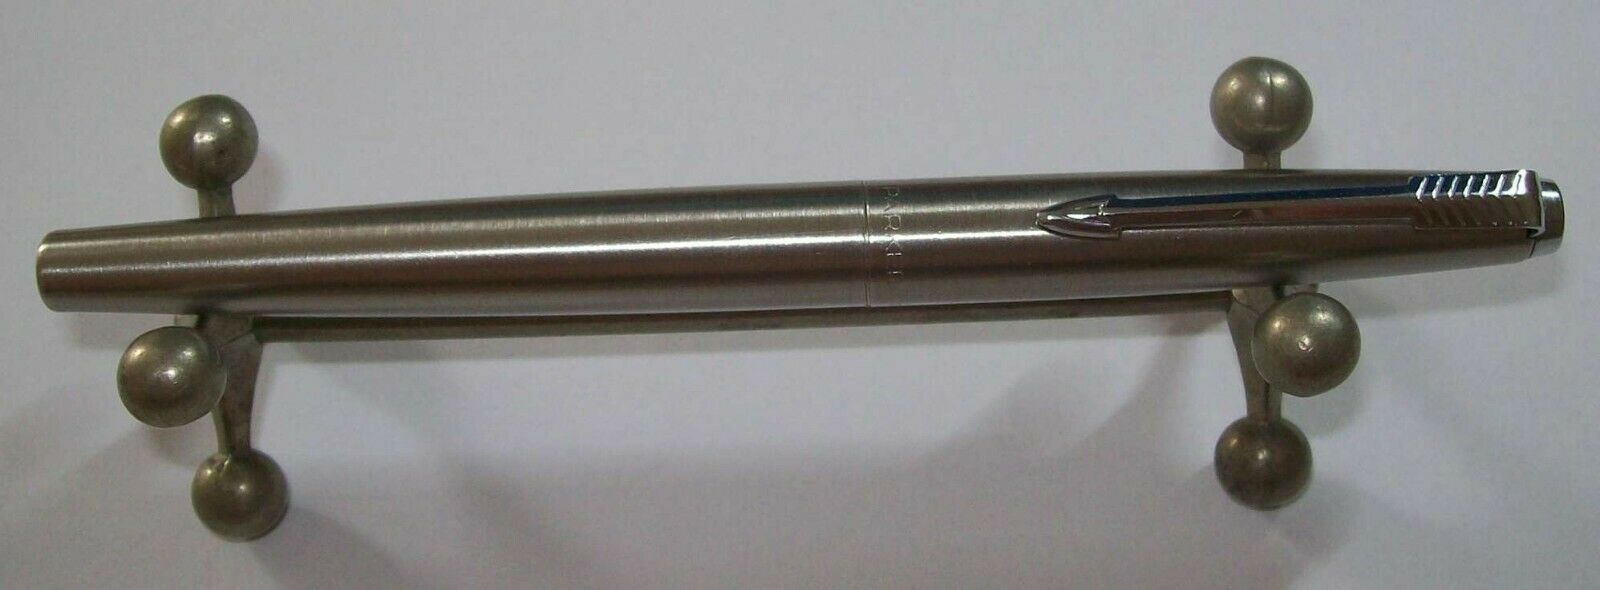 Parker 15 Stainless Steel CT Flighter vintage fountain pen 1980s - $40.50